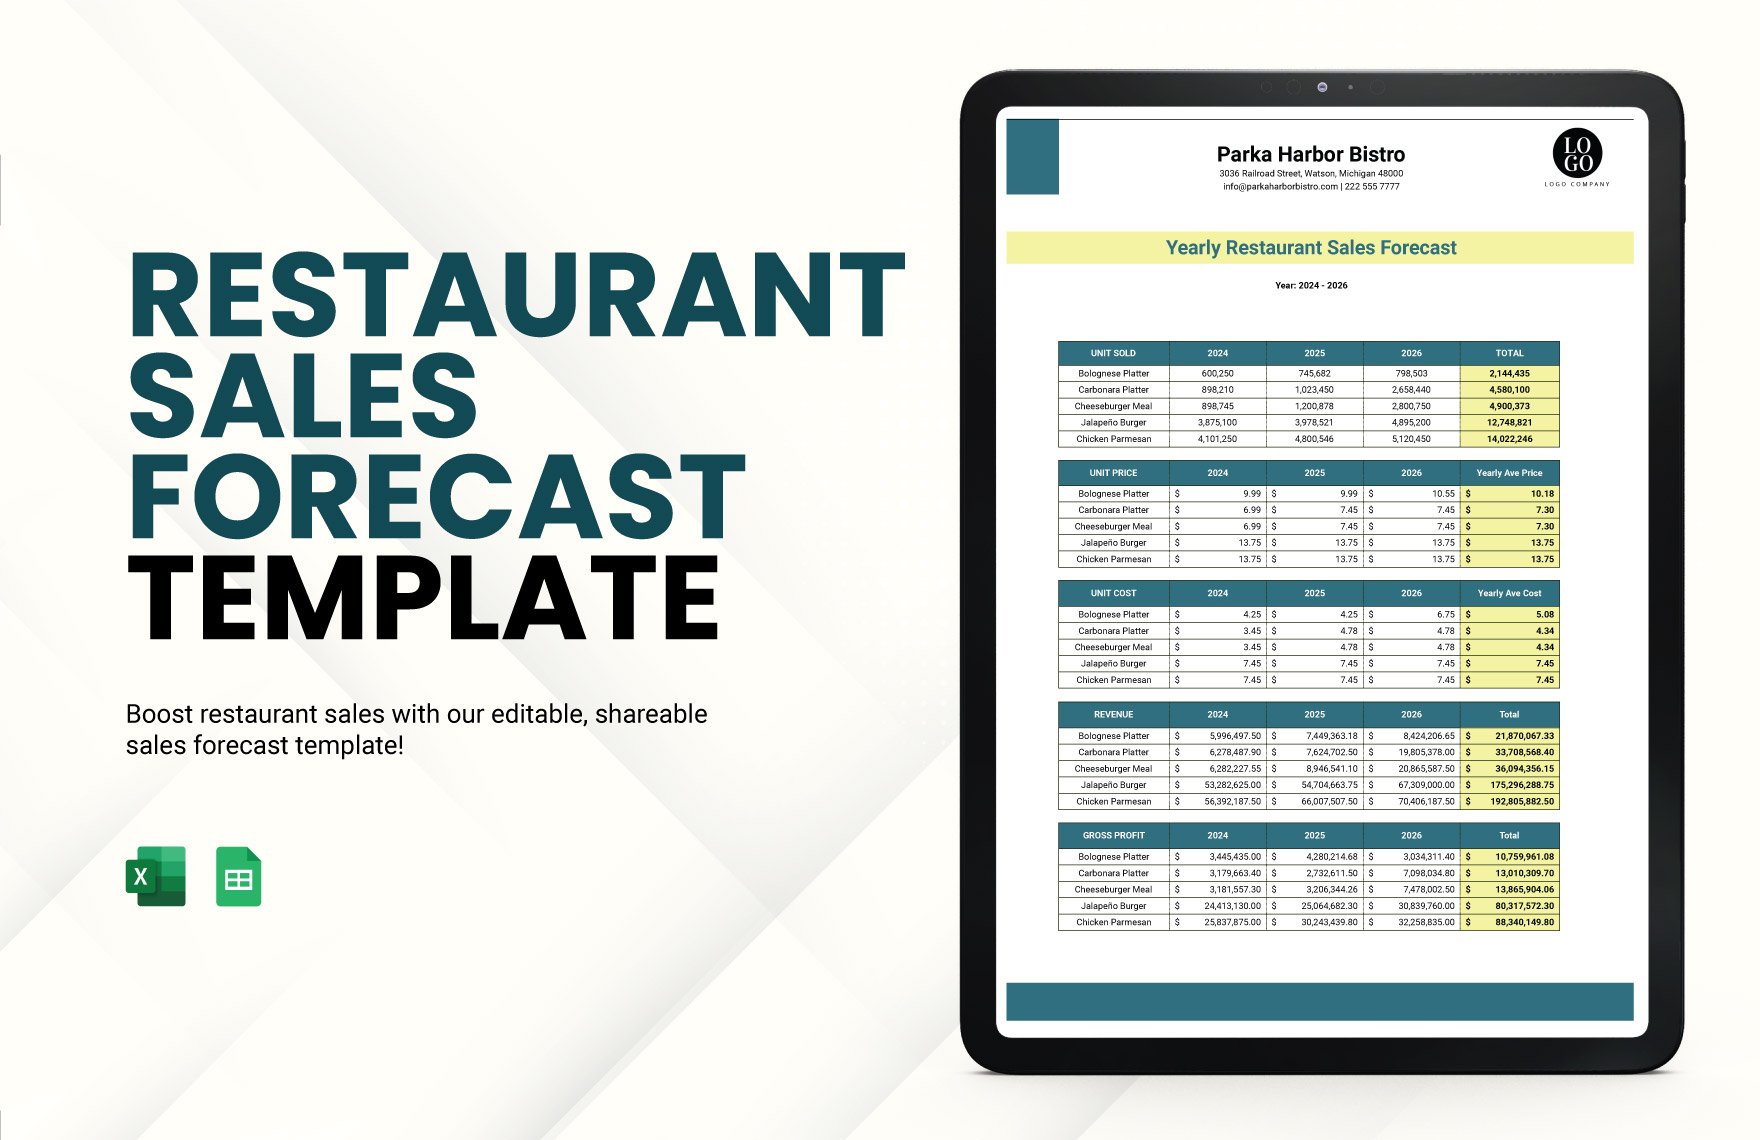 Restaurant Sales Forecast Template